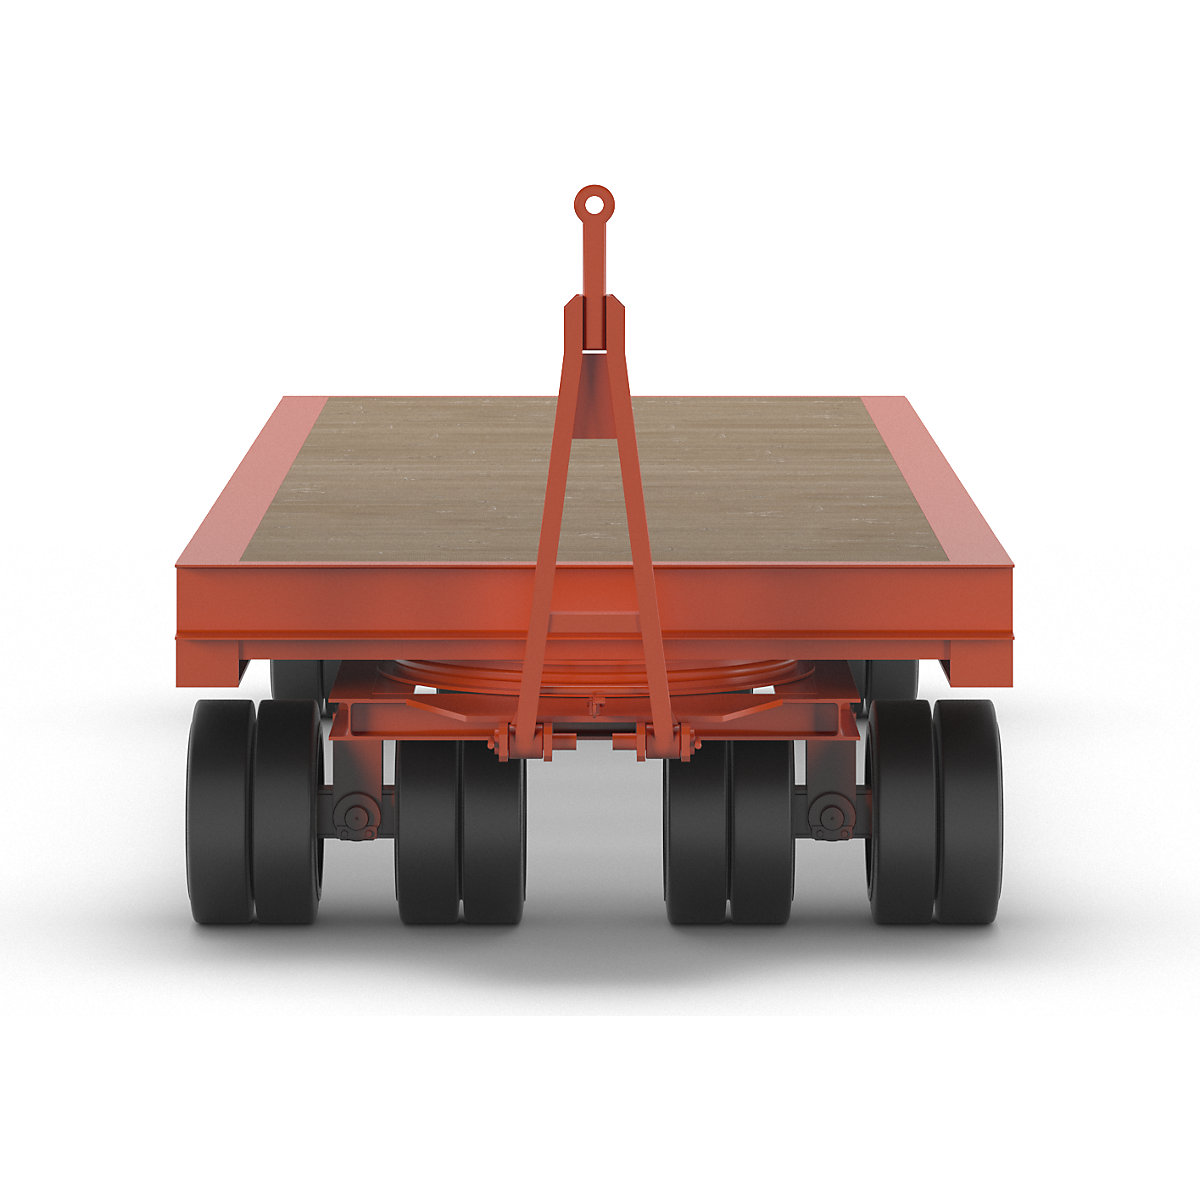 Heavy goods trailer (Product illustration 8)-7